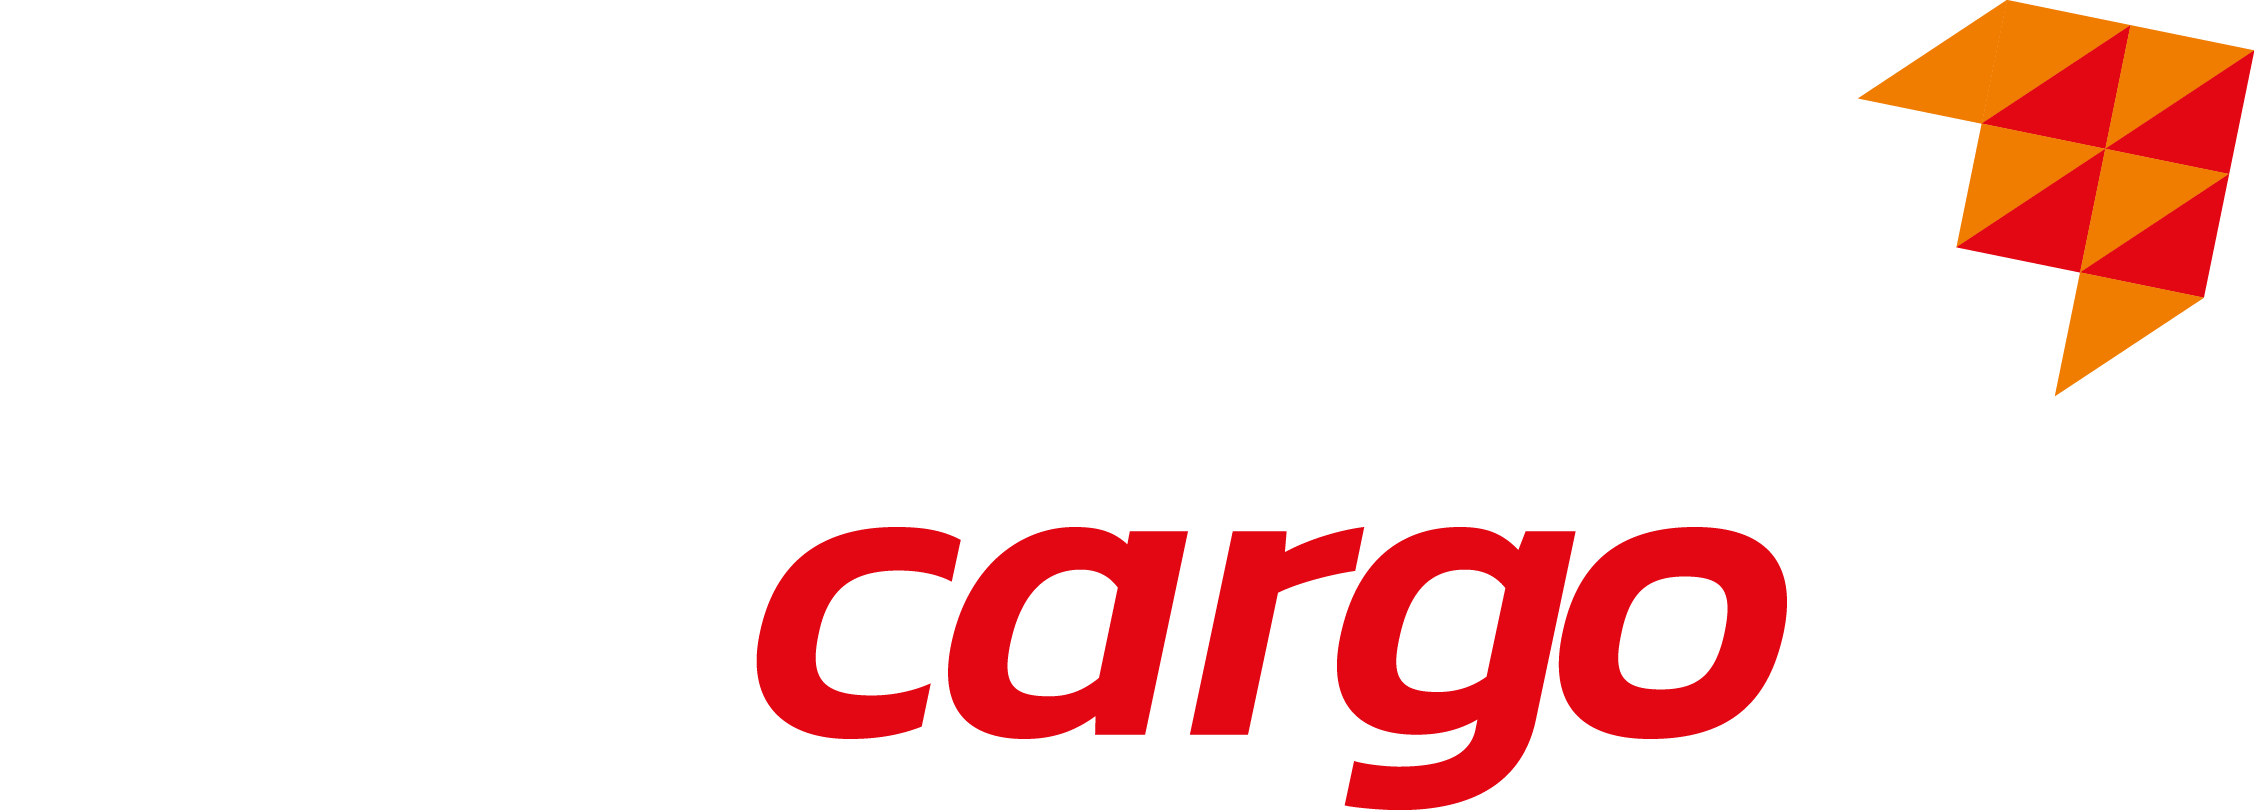 Mr Rocket Cargo TR